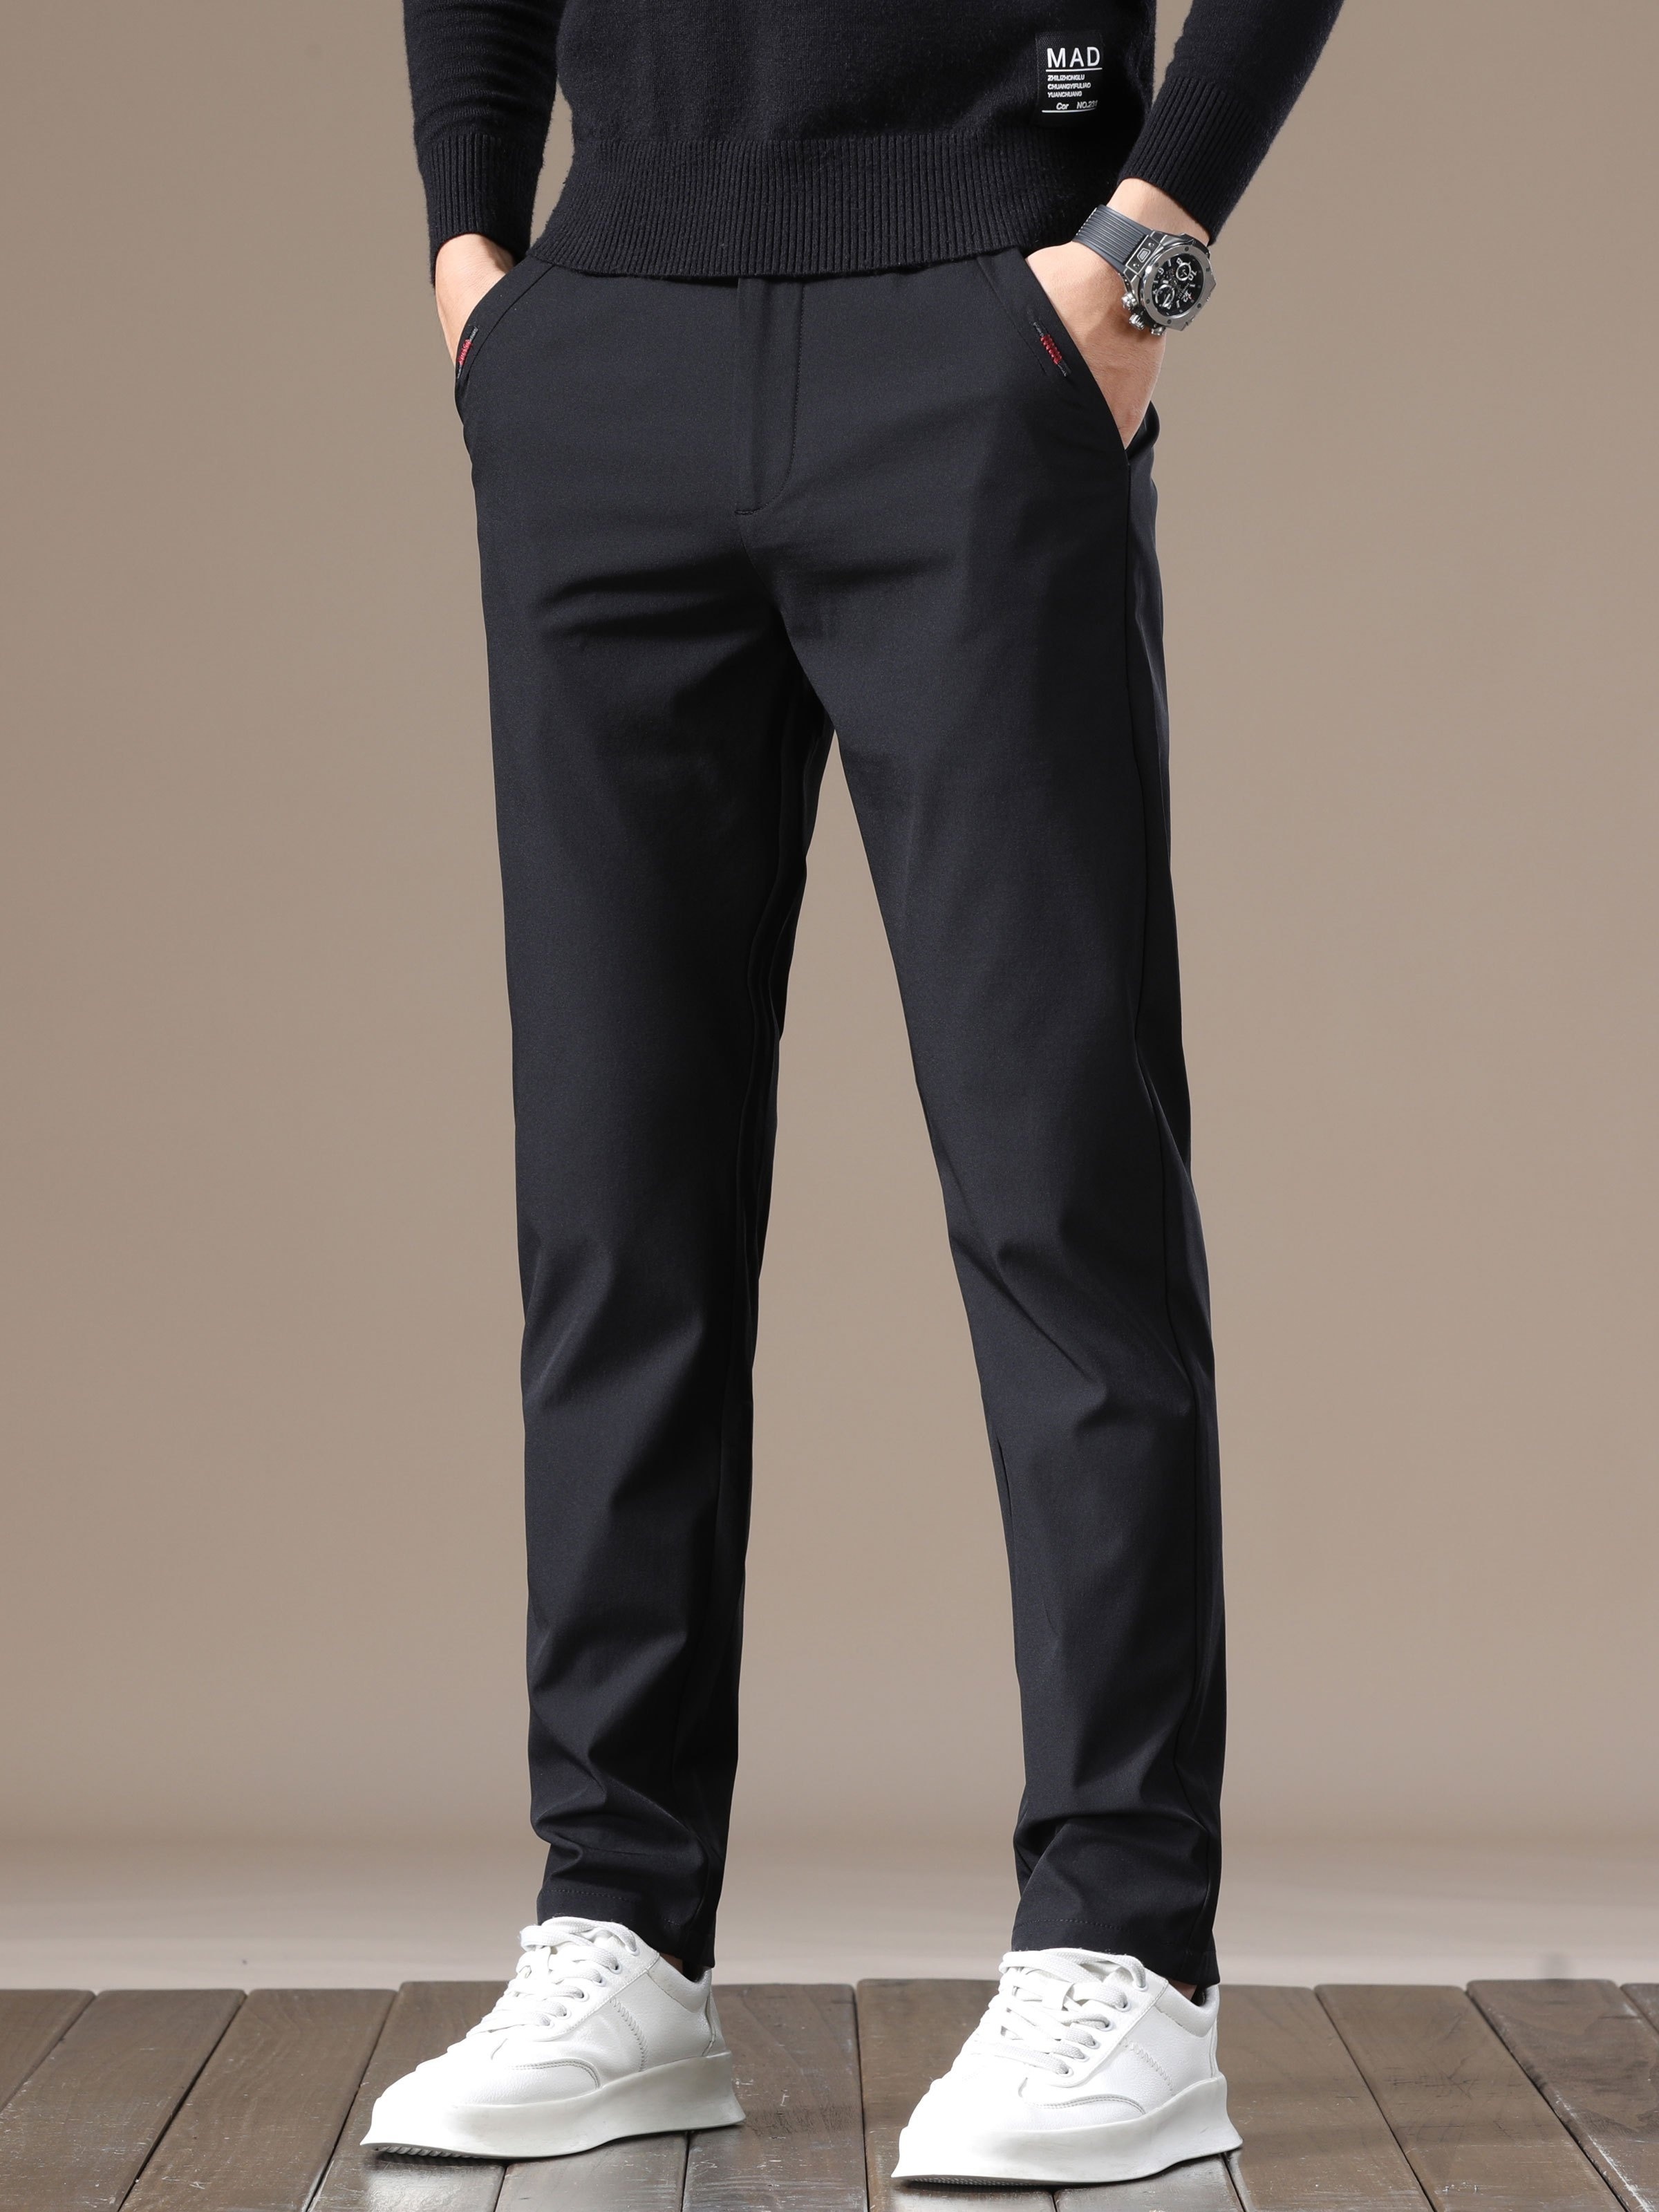 Spandex High Stretch Dress Pants, Men's Semi-formal Classic Design Solid  Color Slim Fit Dress Pants For Business